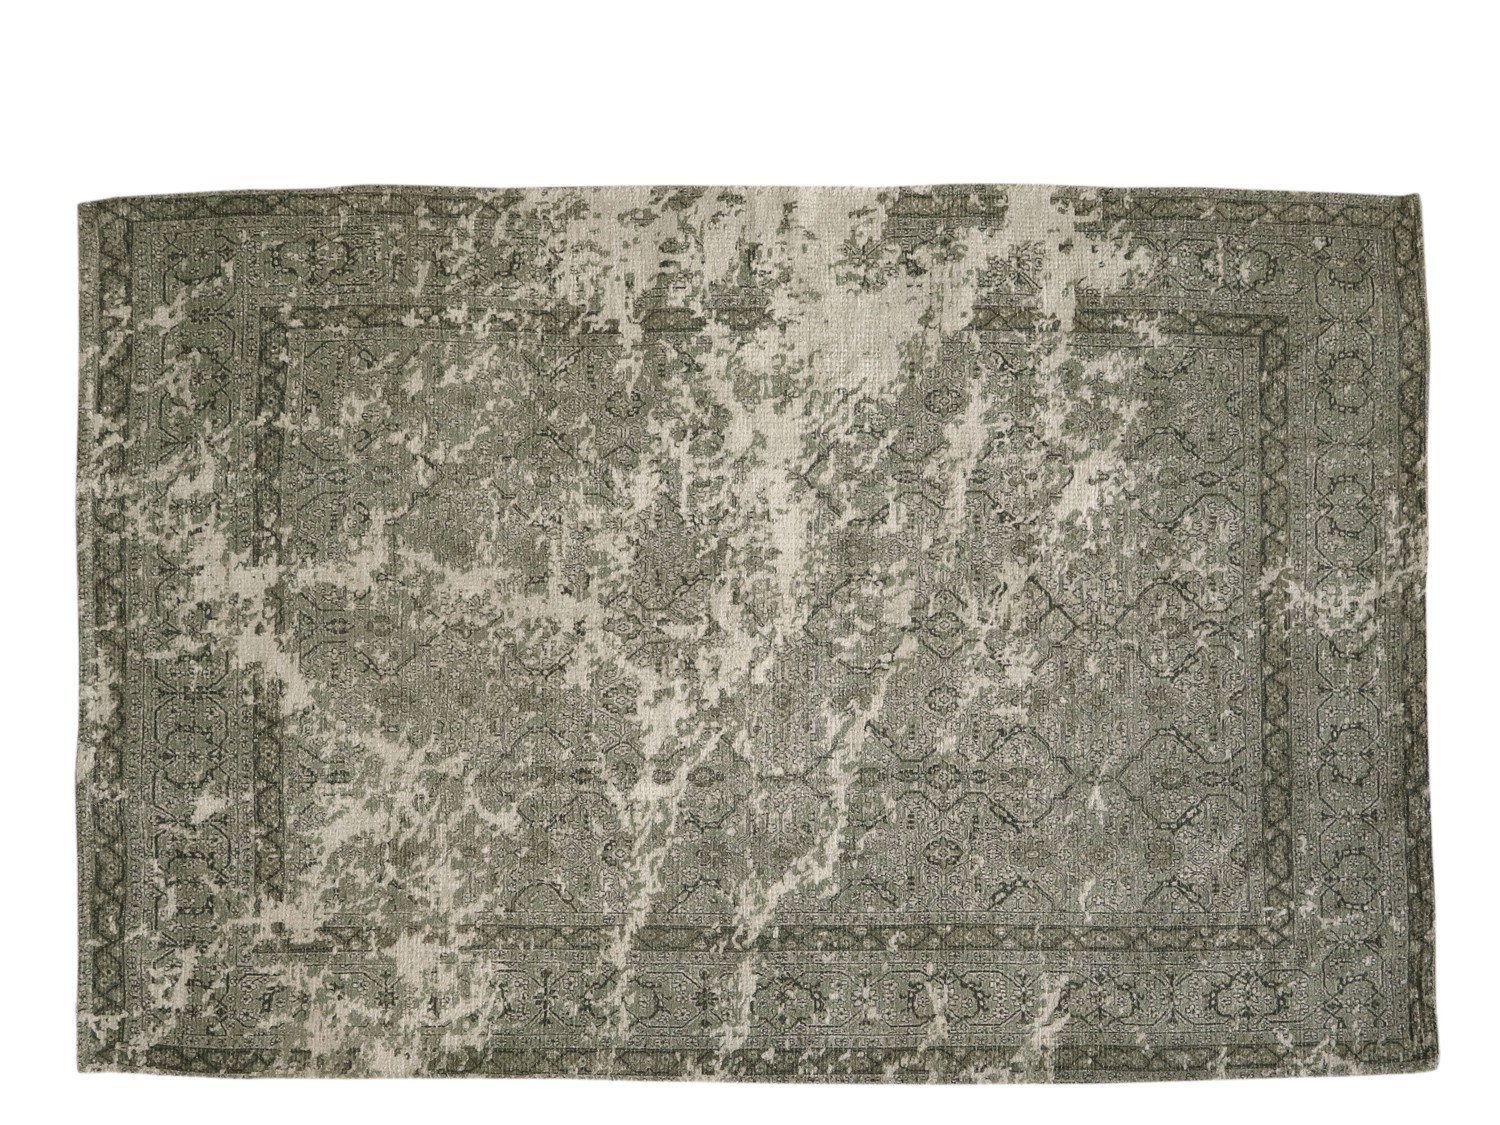 Zelený koberec se vzorem French print verte - 180*120 cm Chic Antique